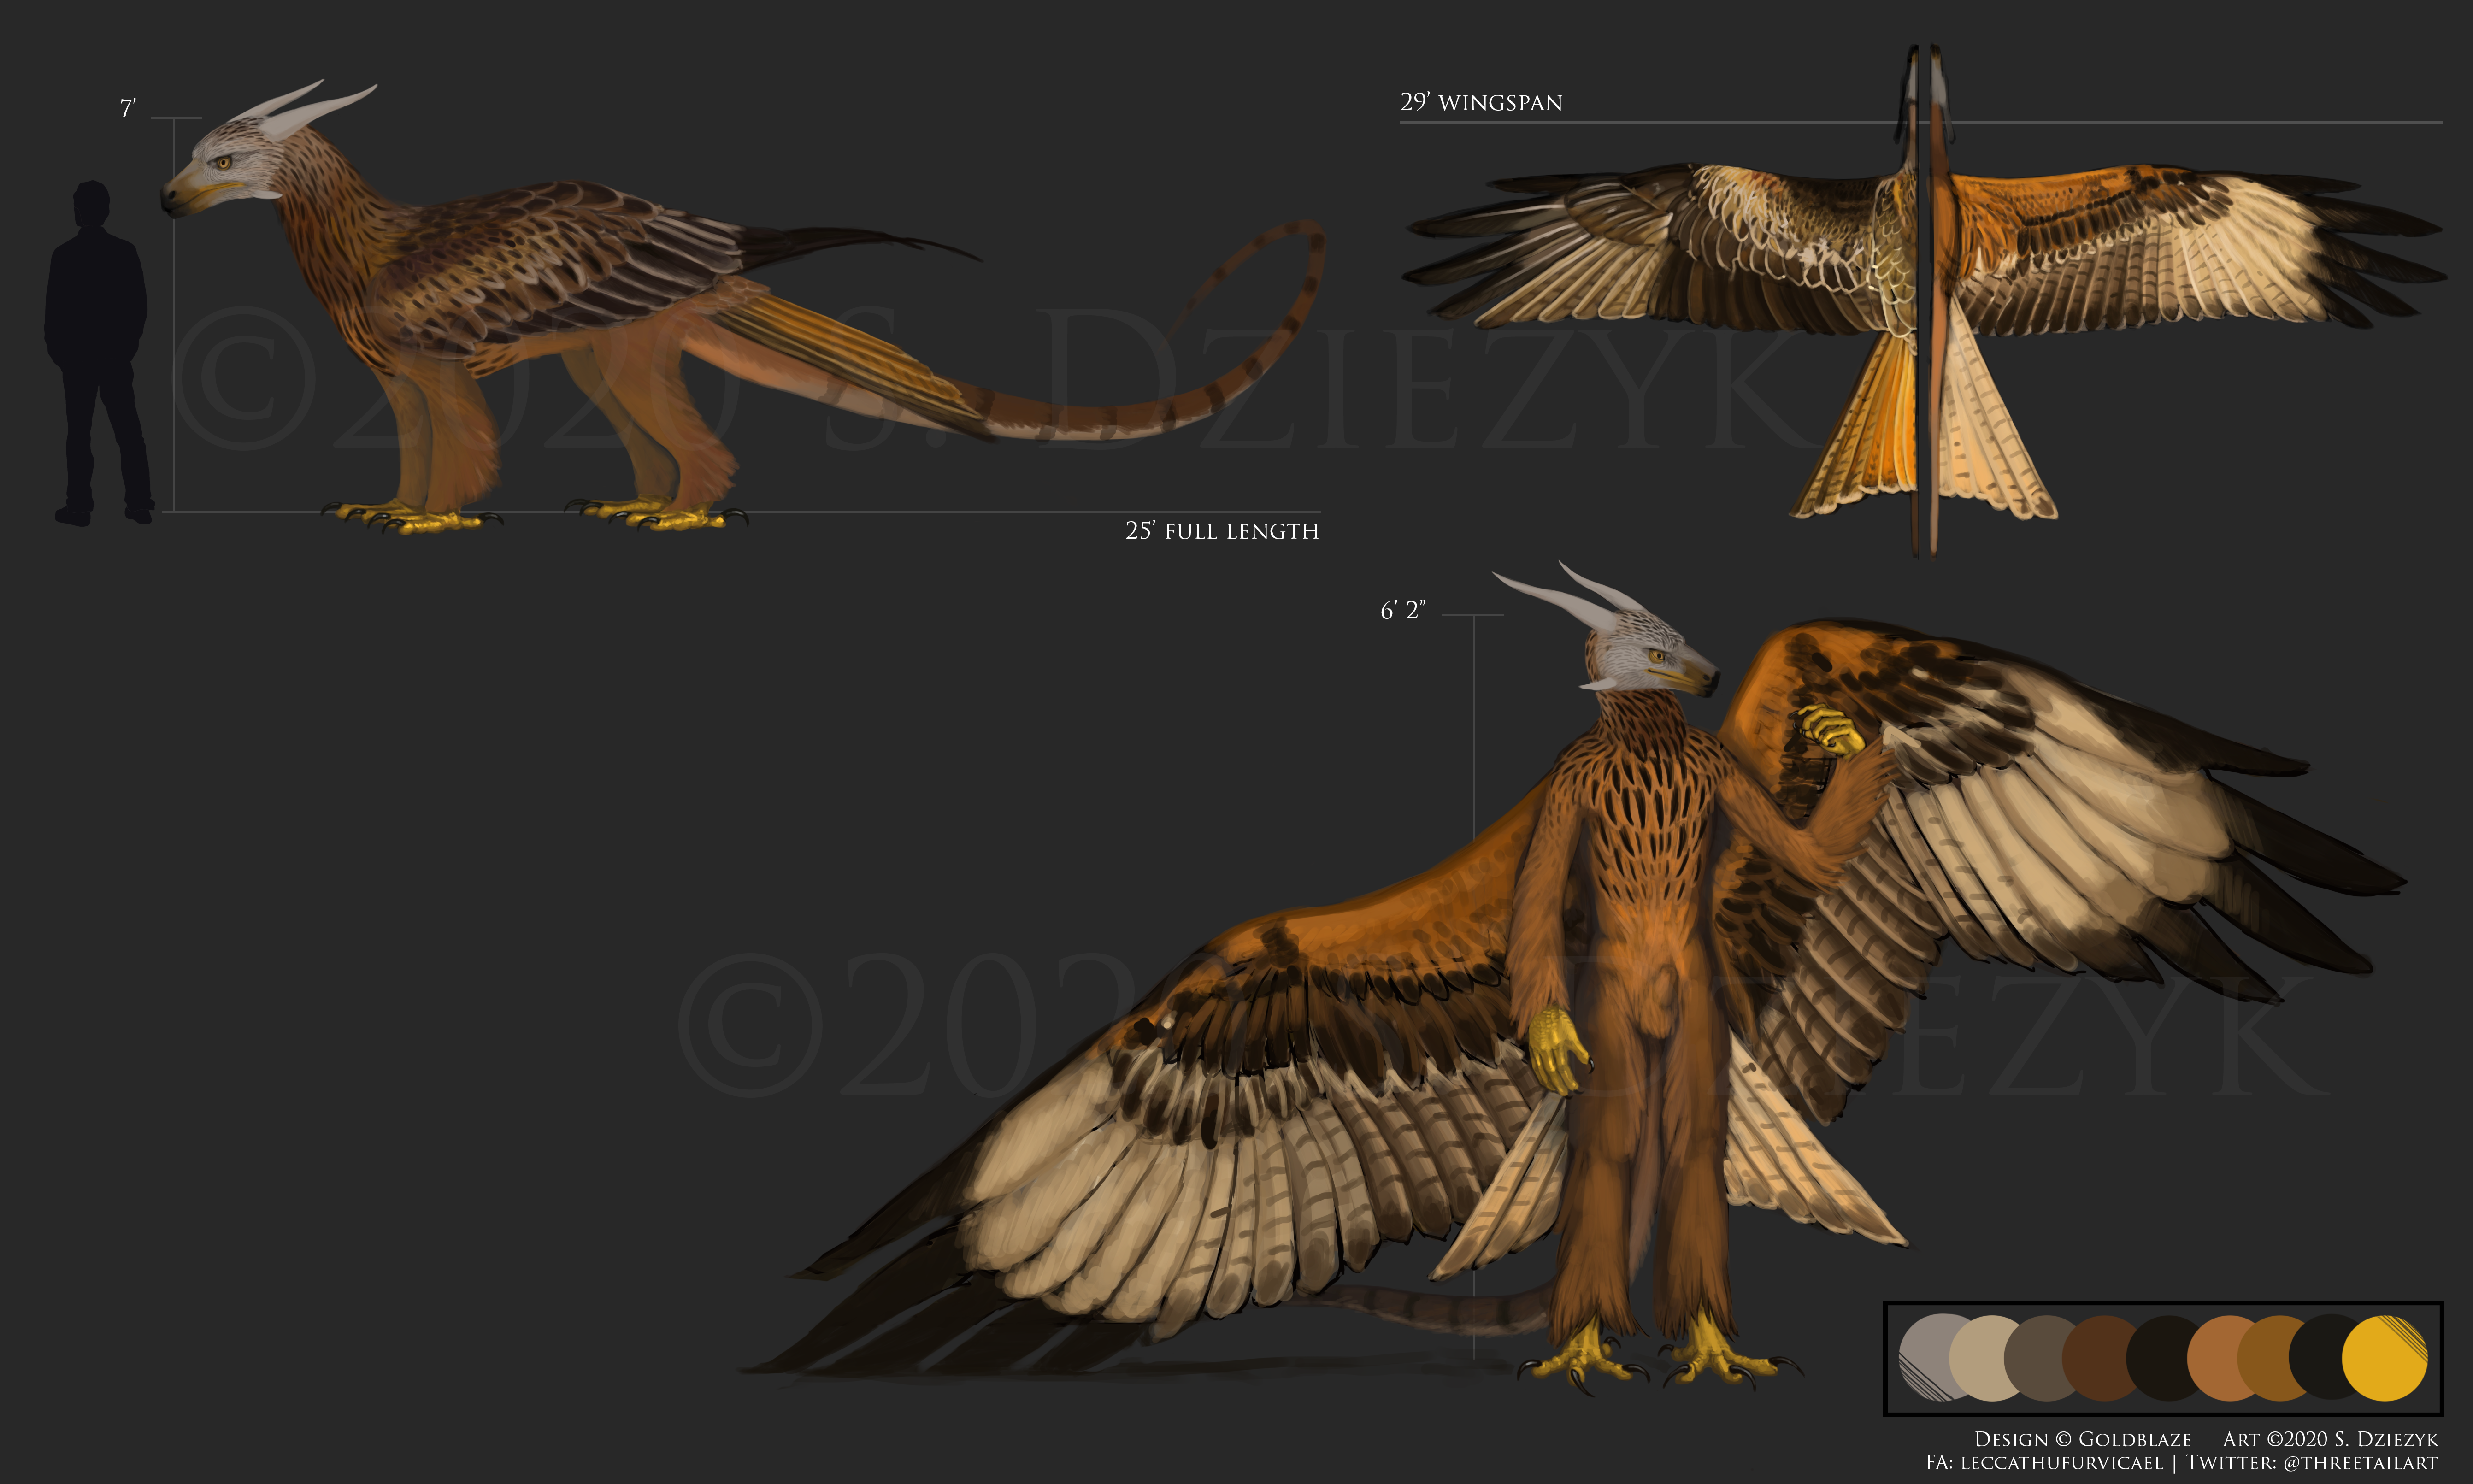 Commission- The Golden Hawk by DavidFernandezArt on DeviantArt